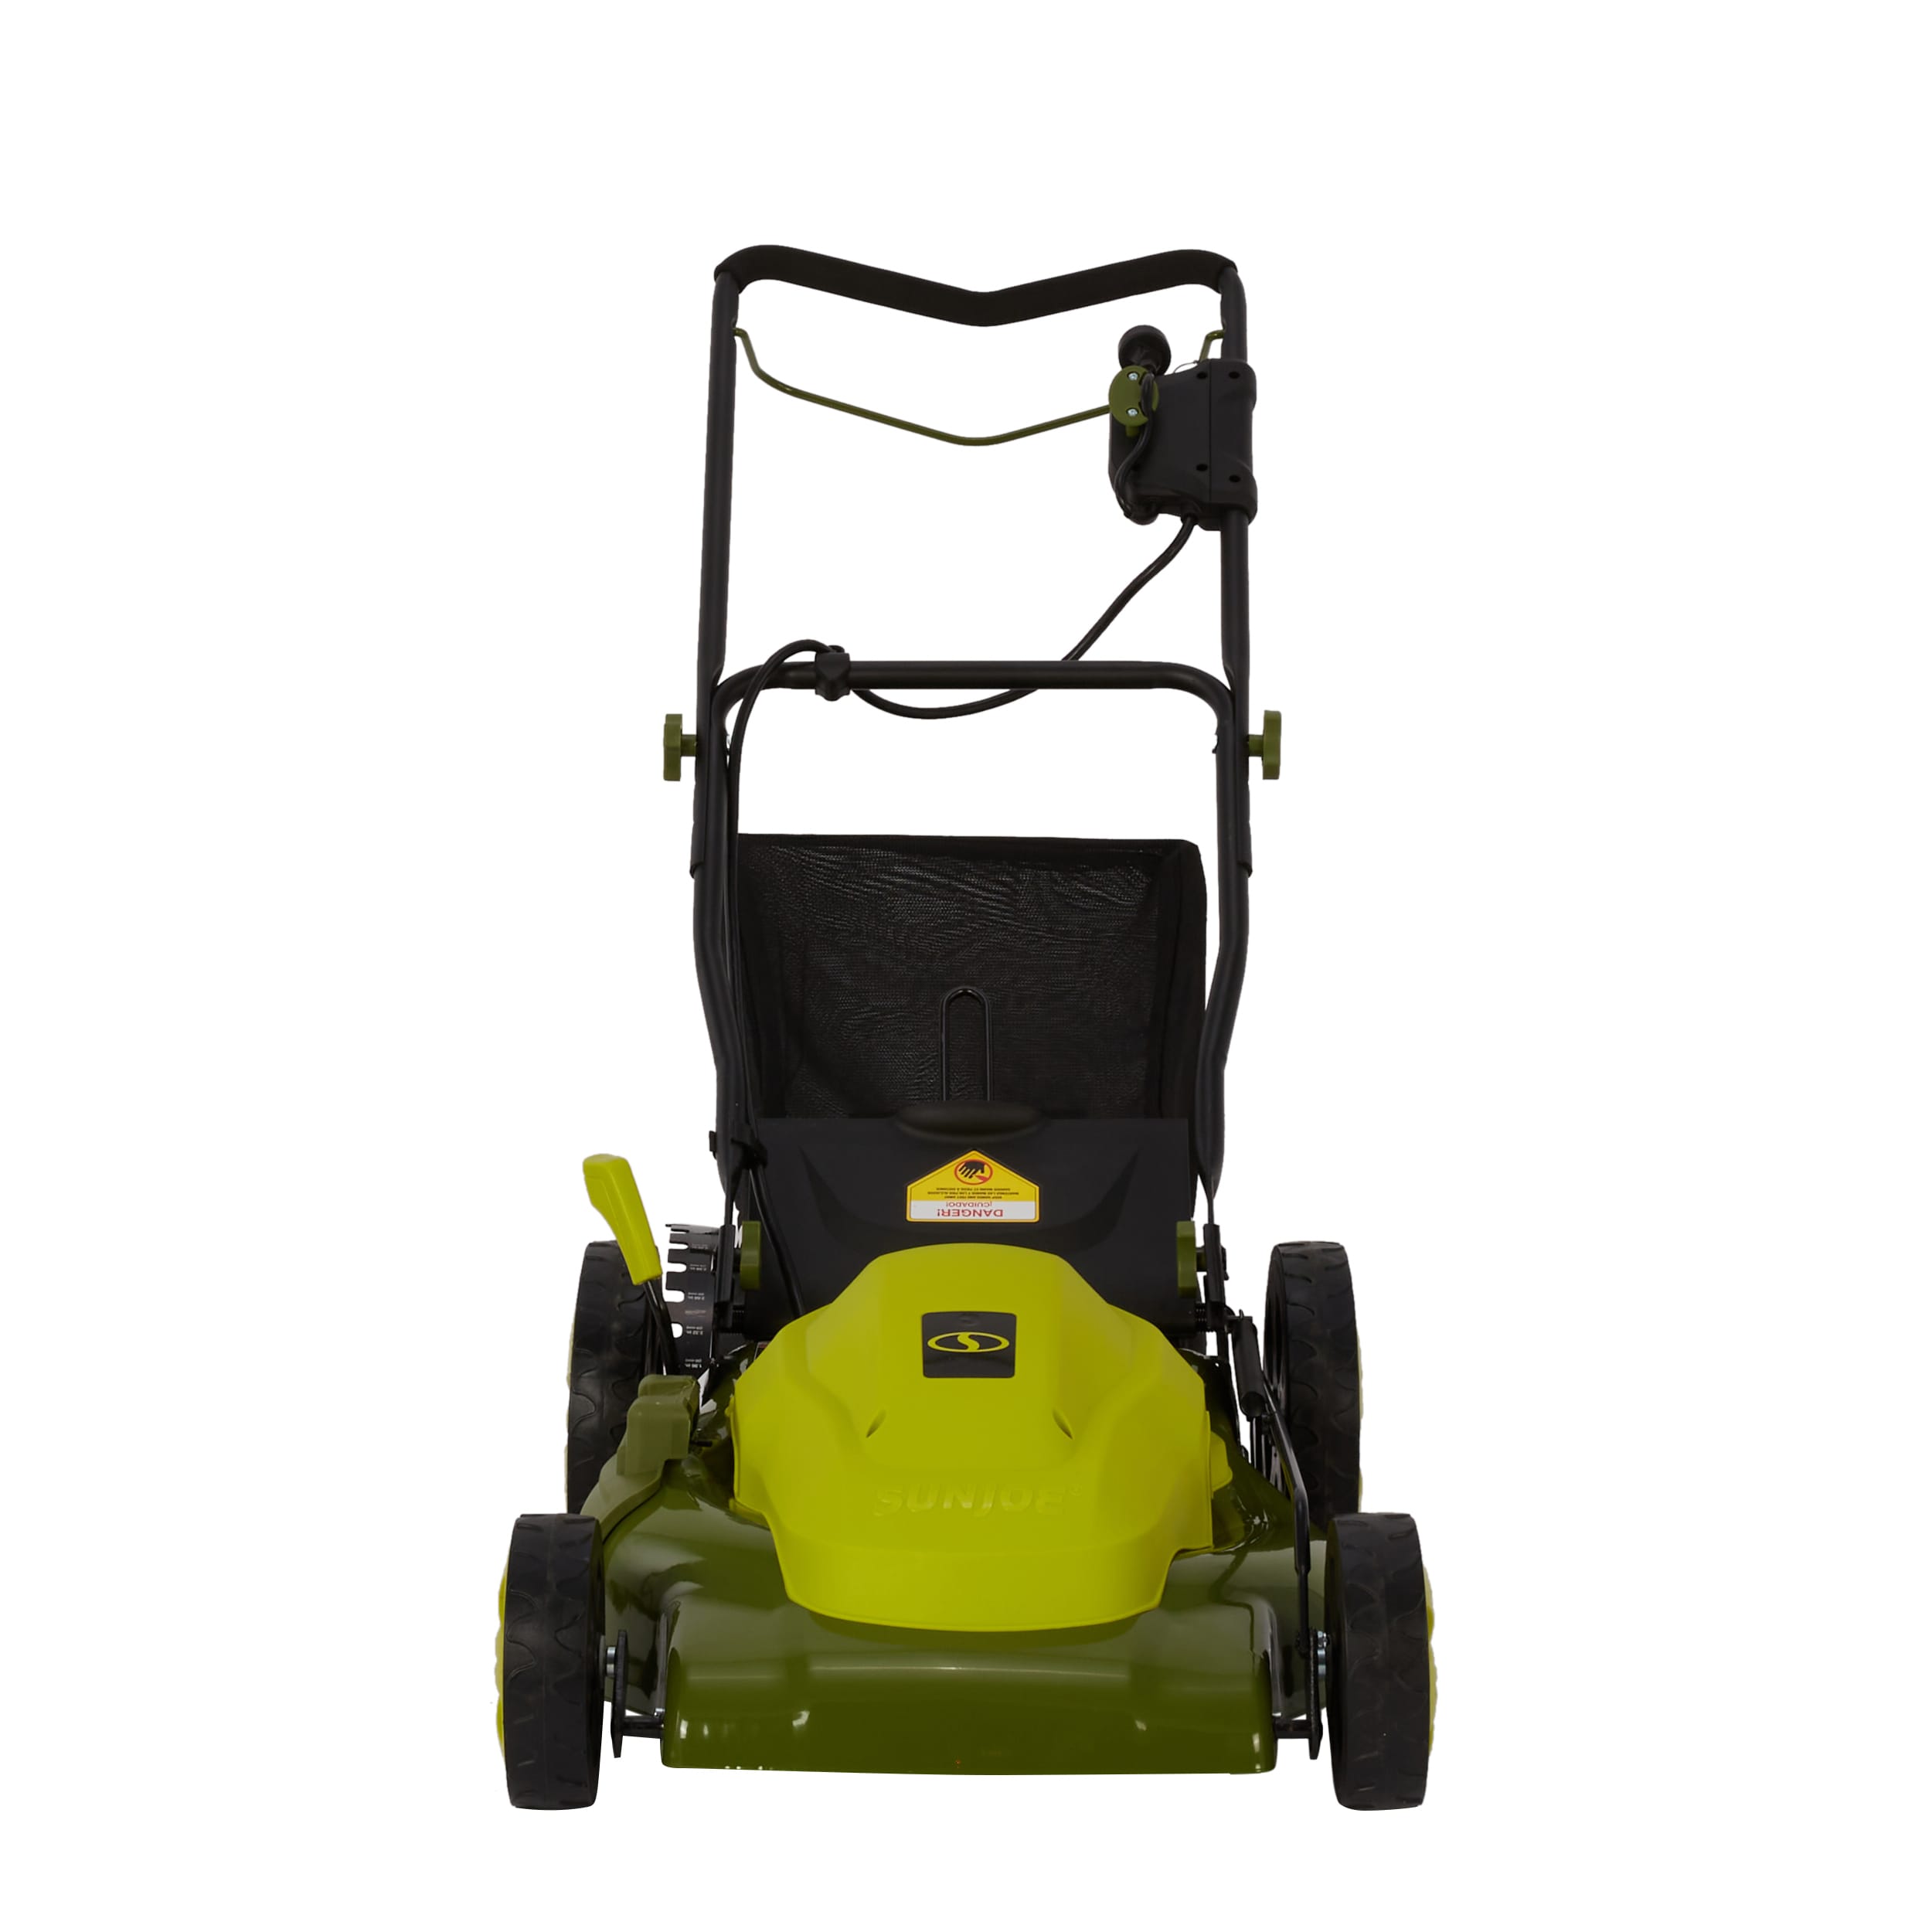 Sun Joe® 20-Inch Corded Electric Lawn Mower in Green